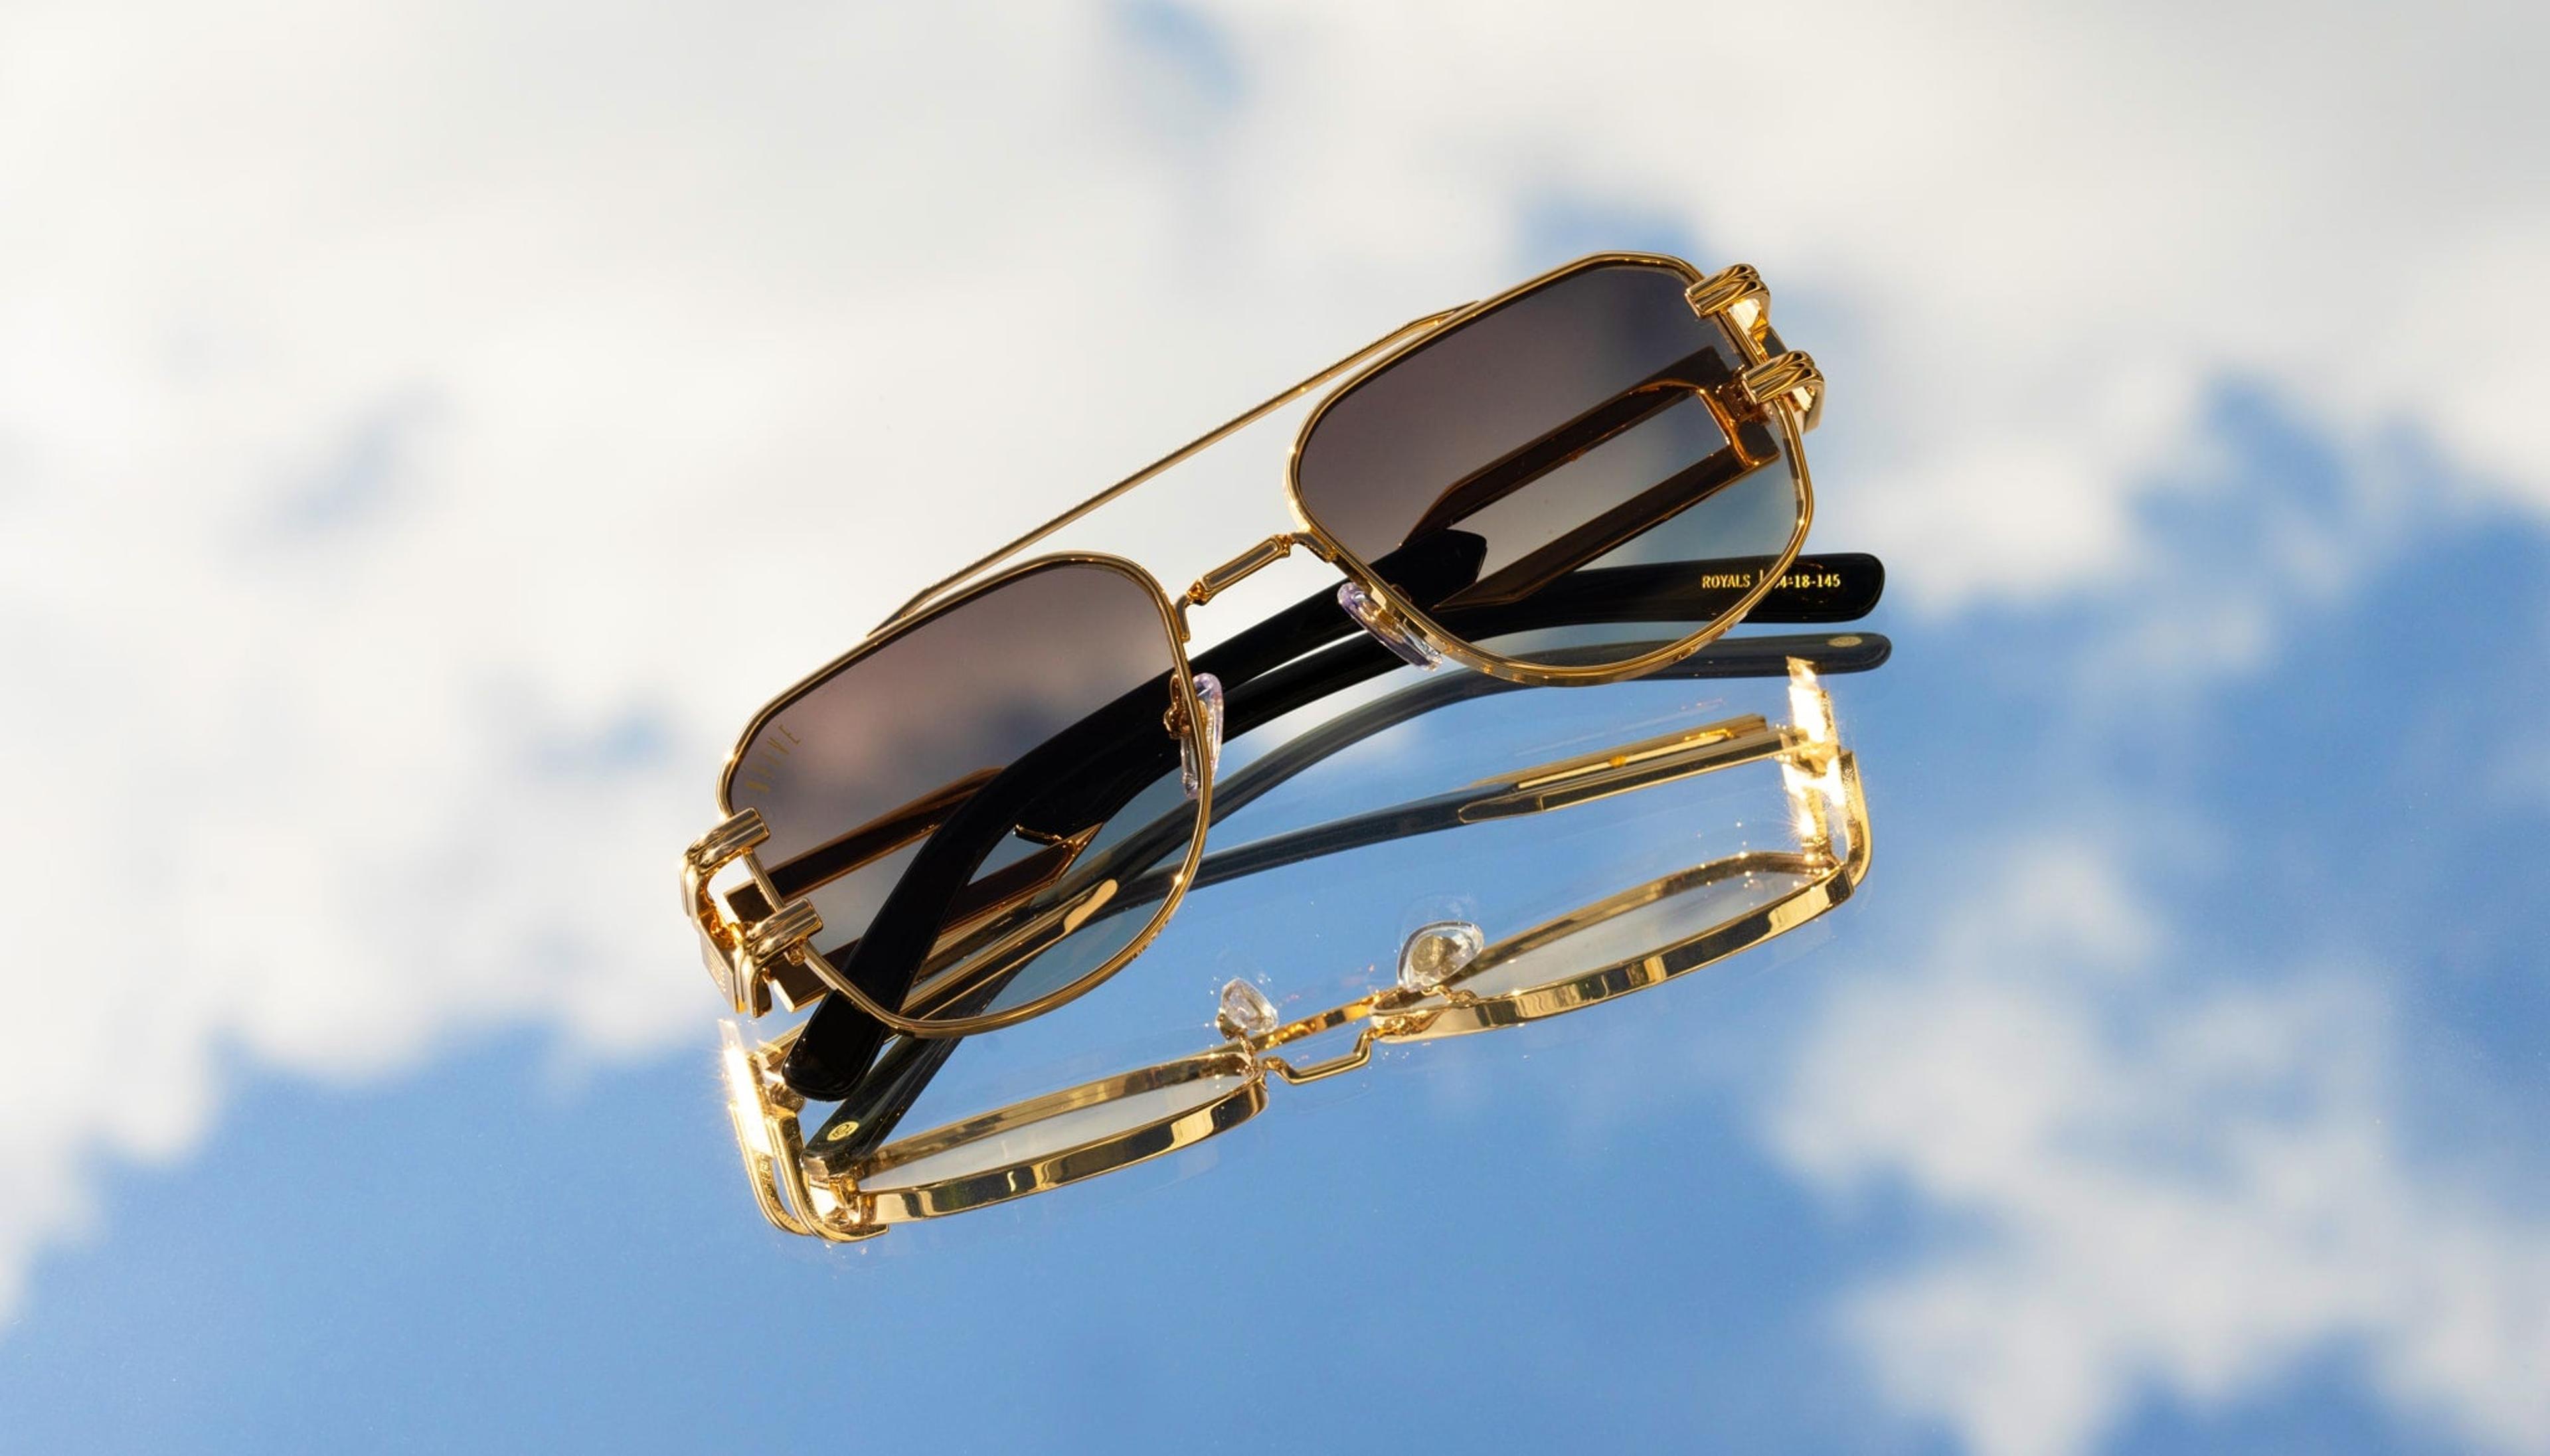 Alternate View 2 of 9FIVE Royals Black & 24K Gold Sunglasses Rx